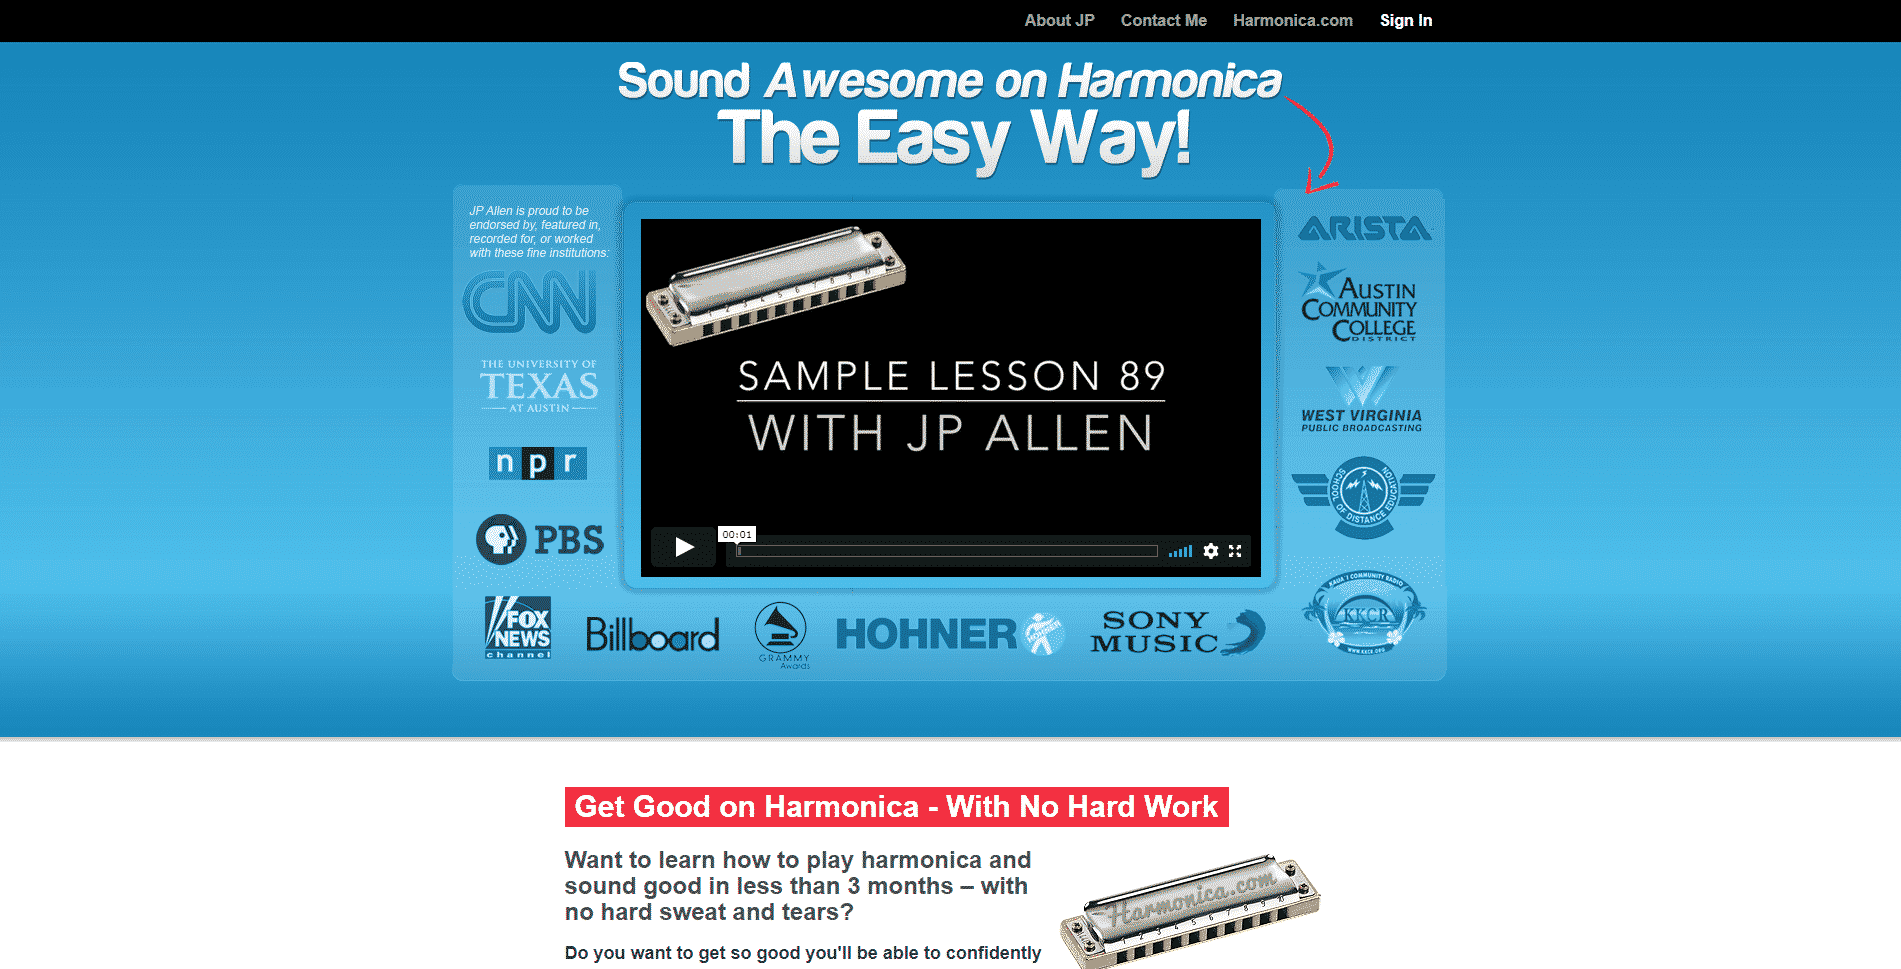 Harmonica.com Harmonica Lessons Online